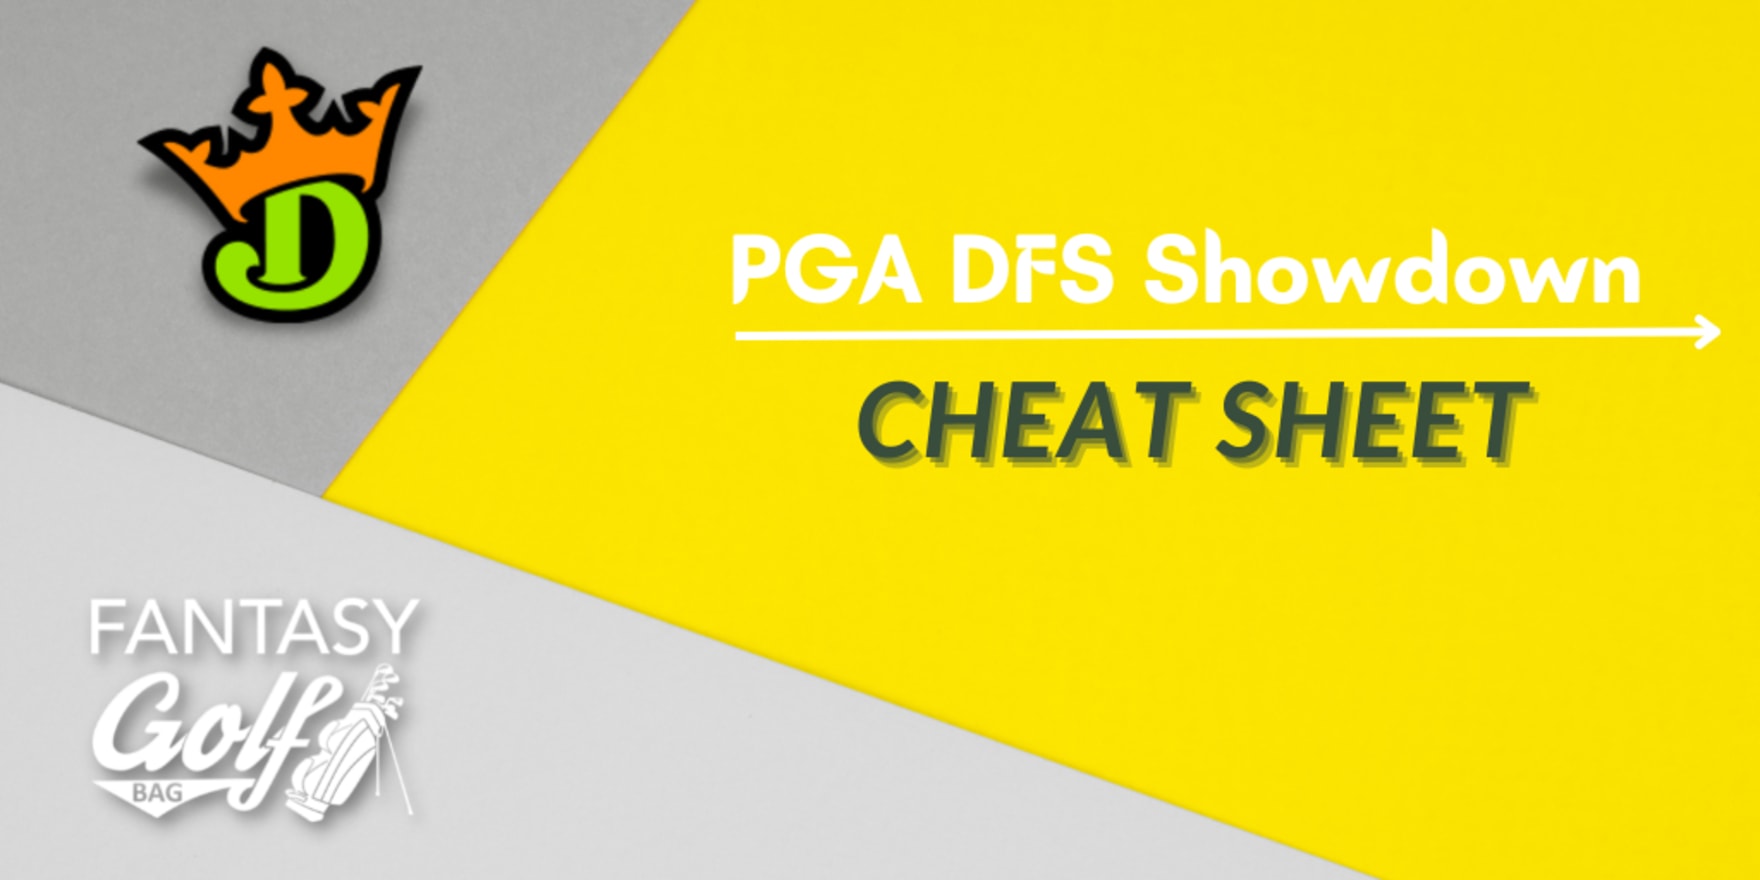 PGA DFS: Showdown Cheatsheet for the Final Round the Valspar